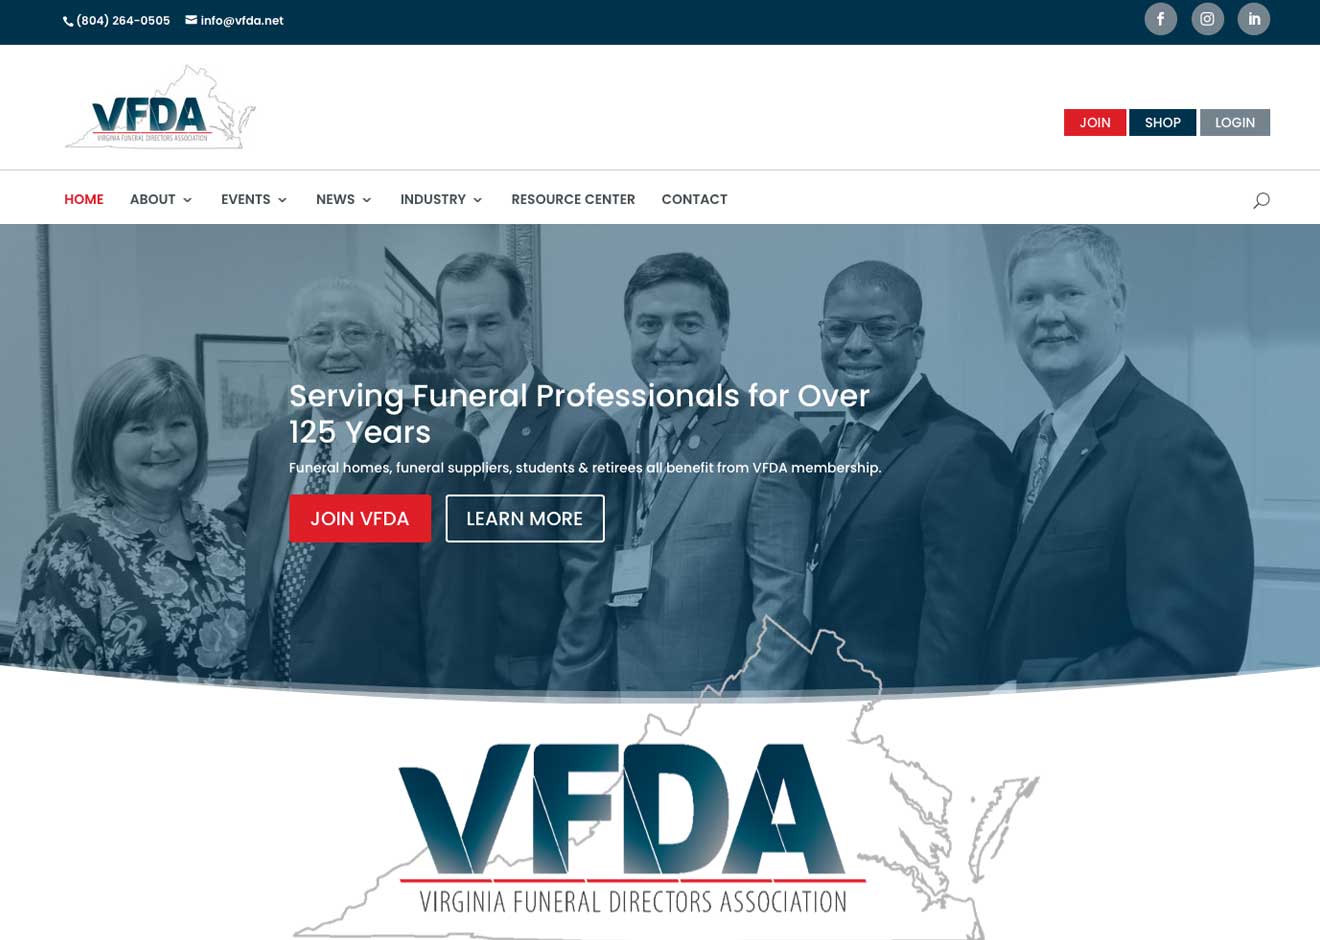 Virginia Funeral Directors Association